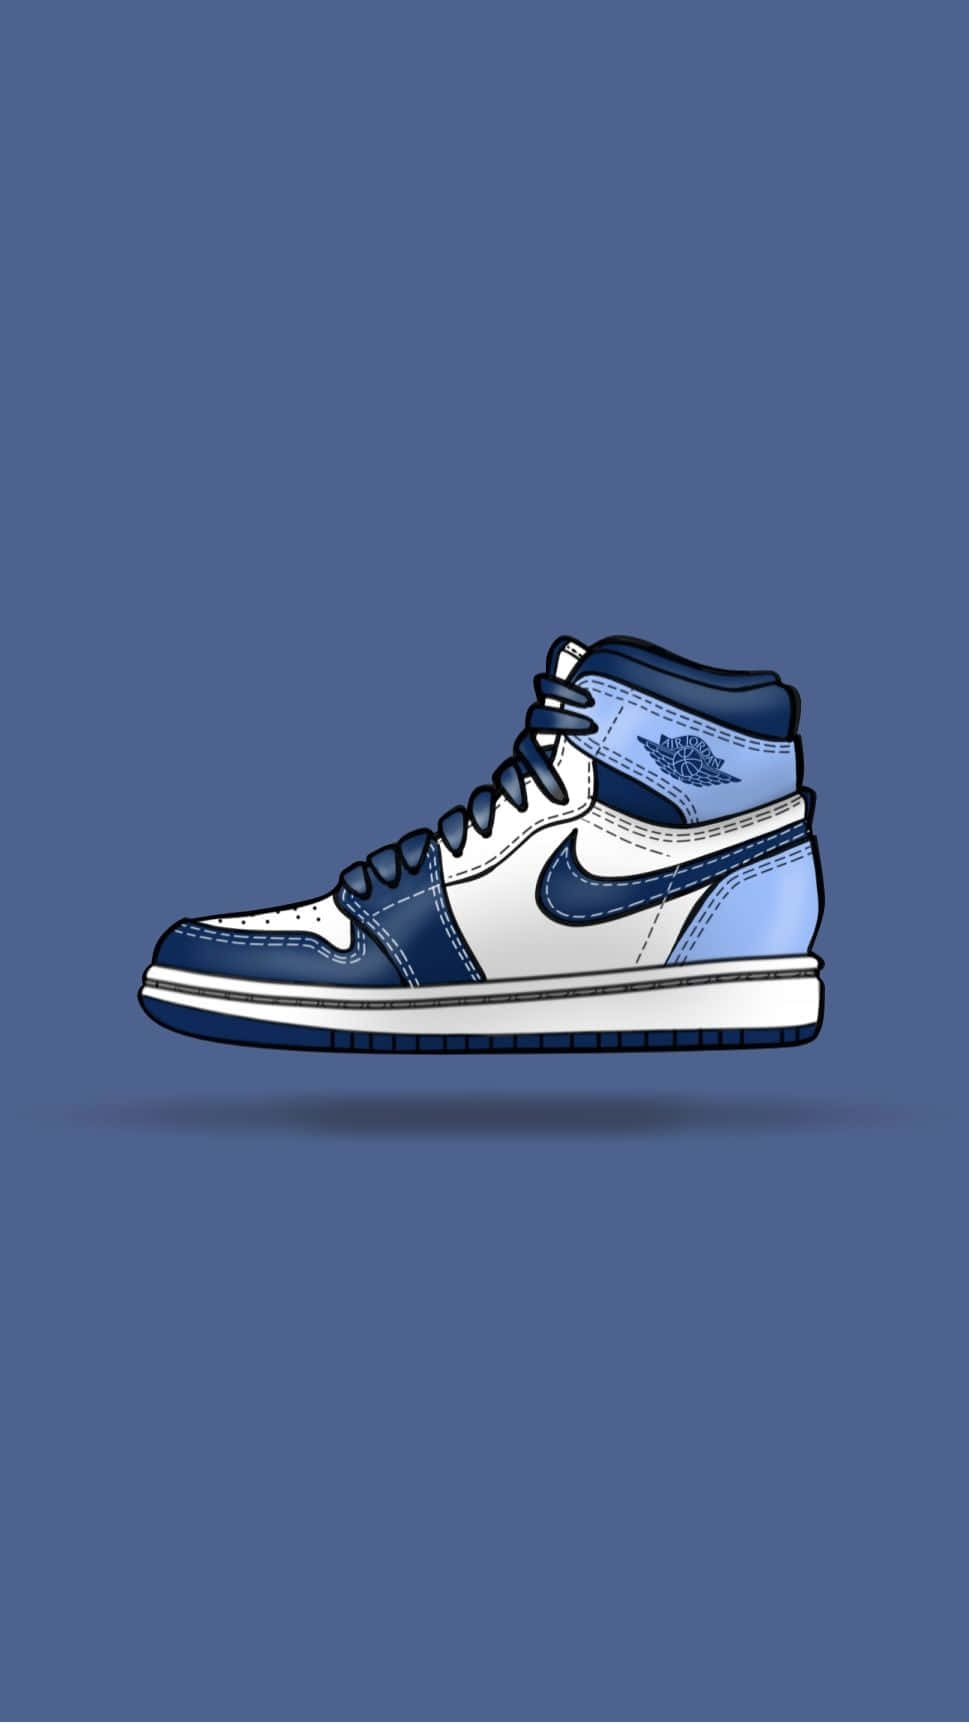 Blue High Top Sneaker Illustration Wallpaper